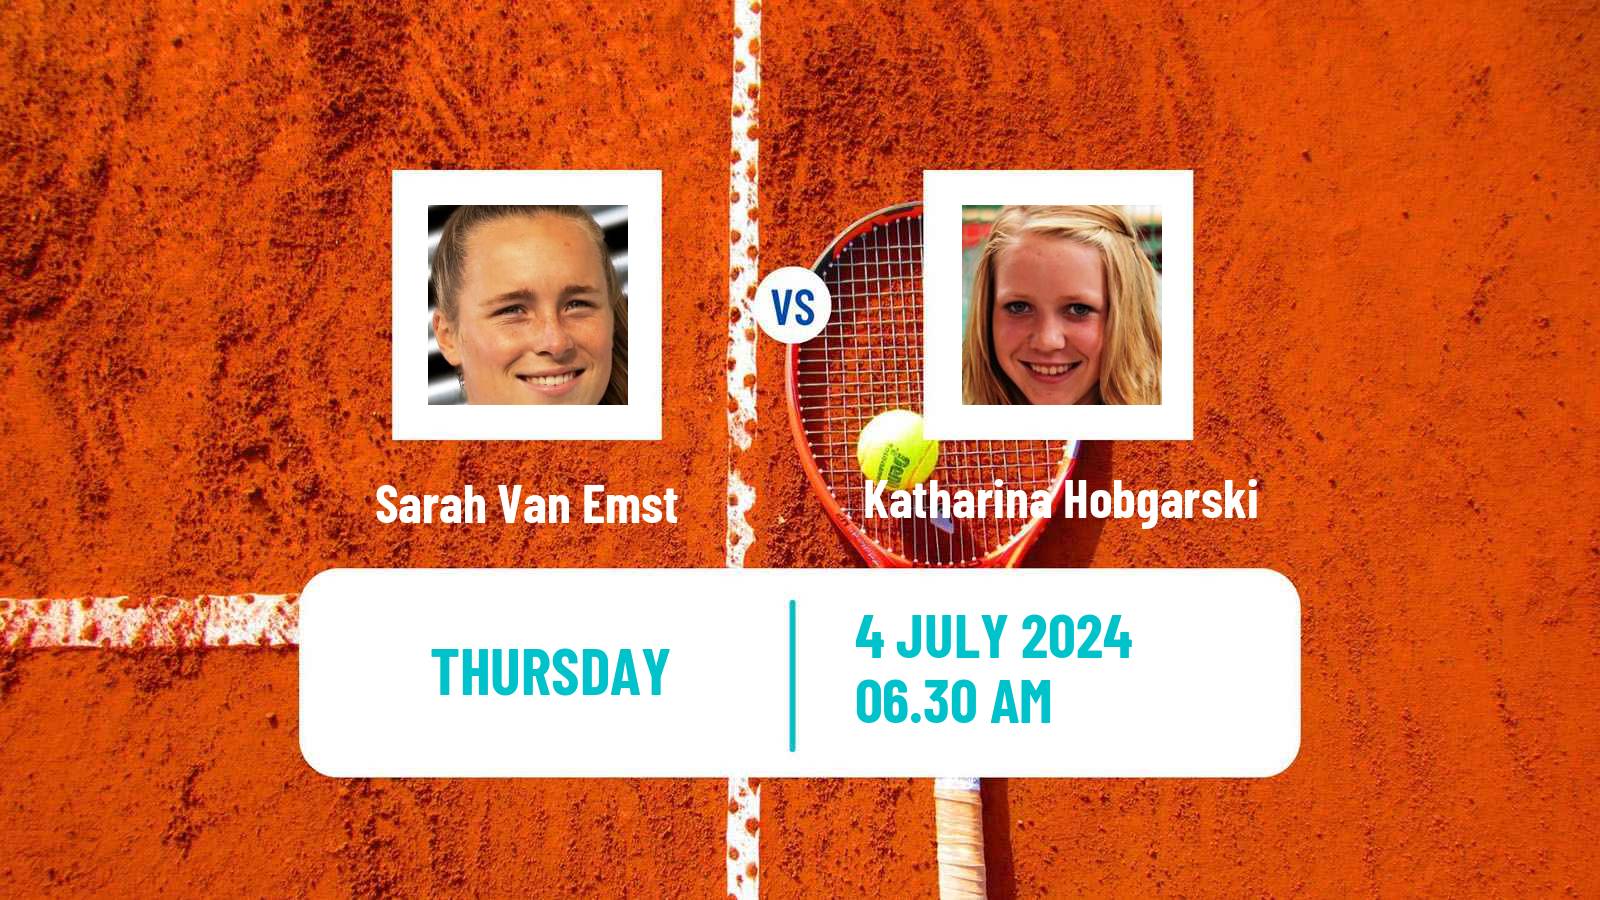 Tennis ITF W35 Amstelveen Women Sarah Van Emst - Katharina Hobgarski